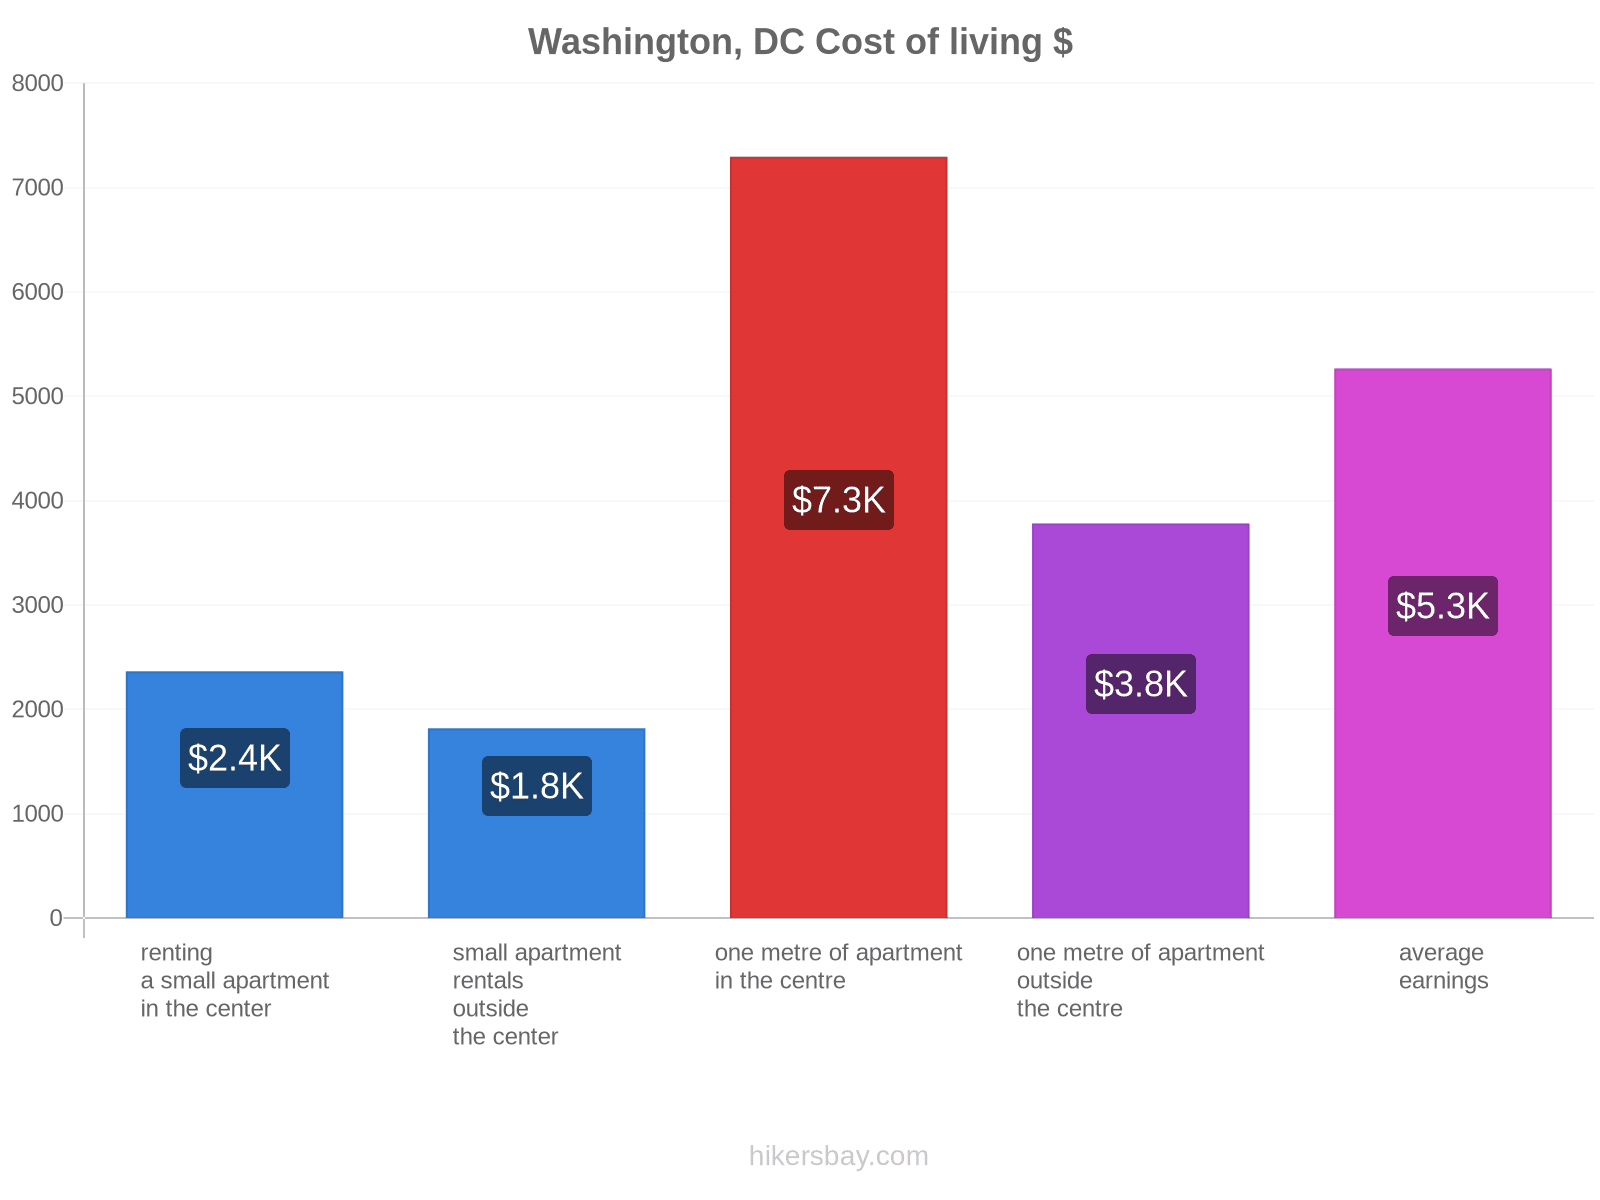 Washington, DC cost of living hikersbay.com